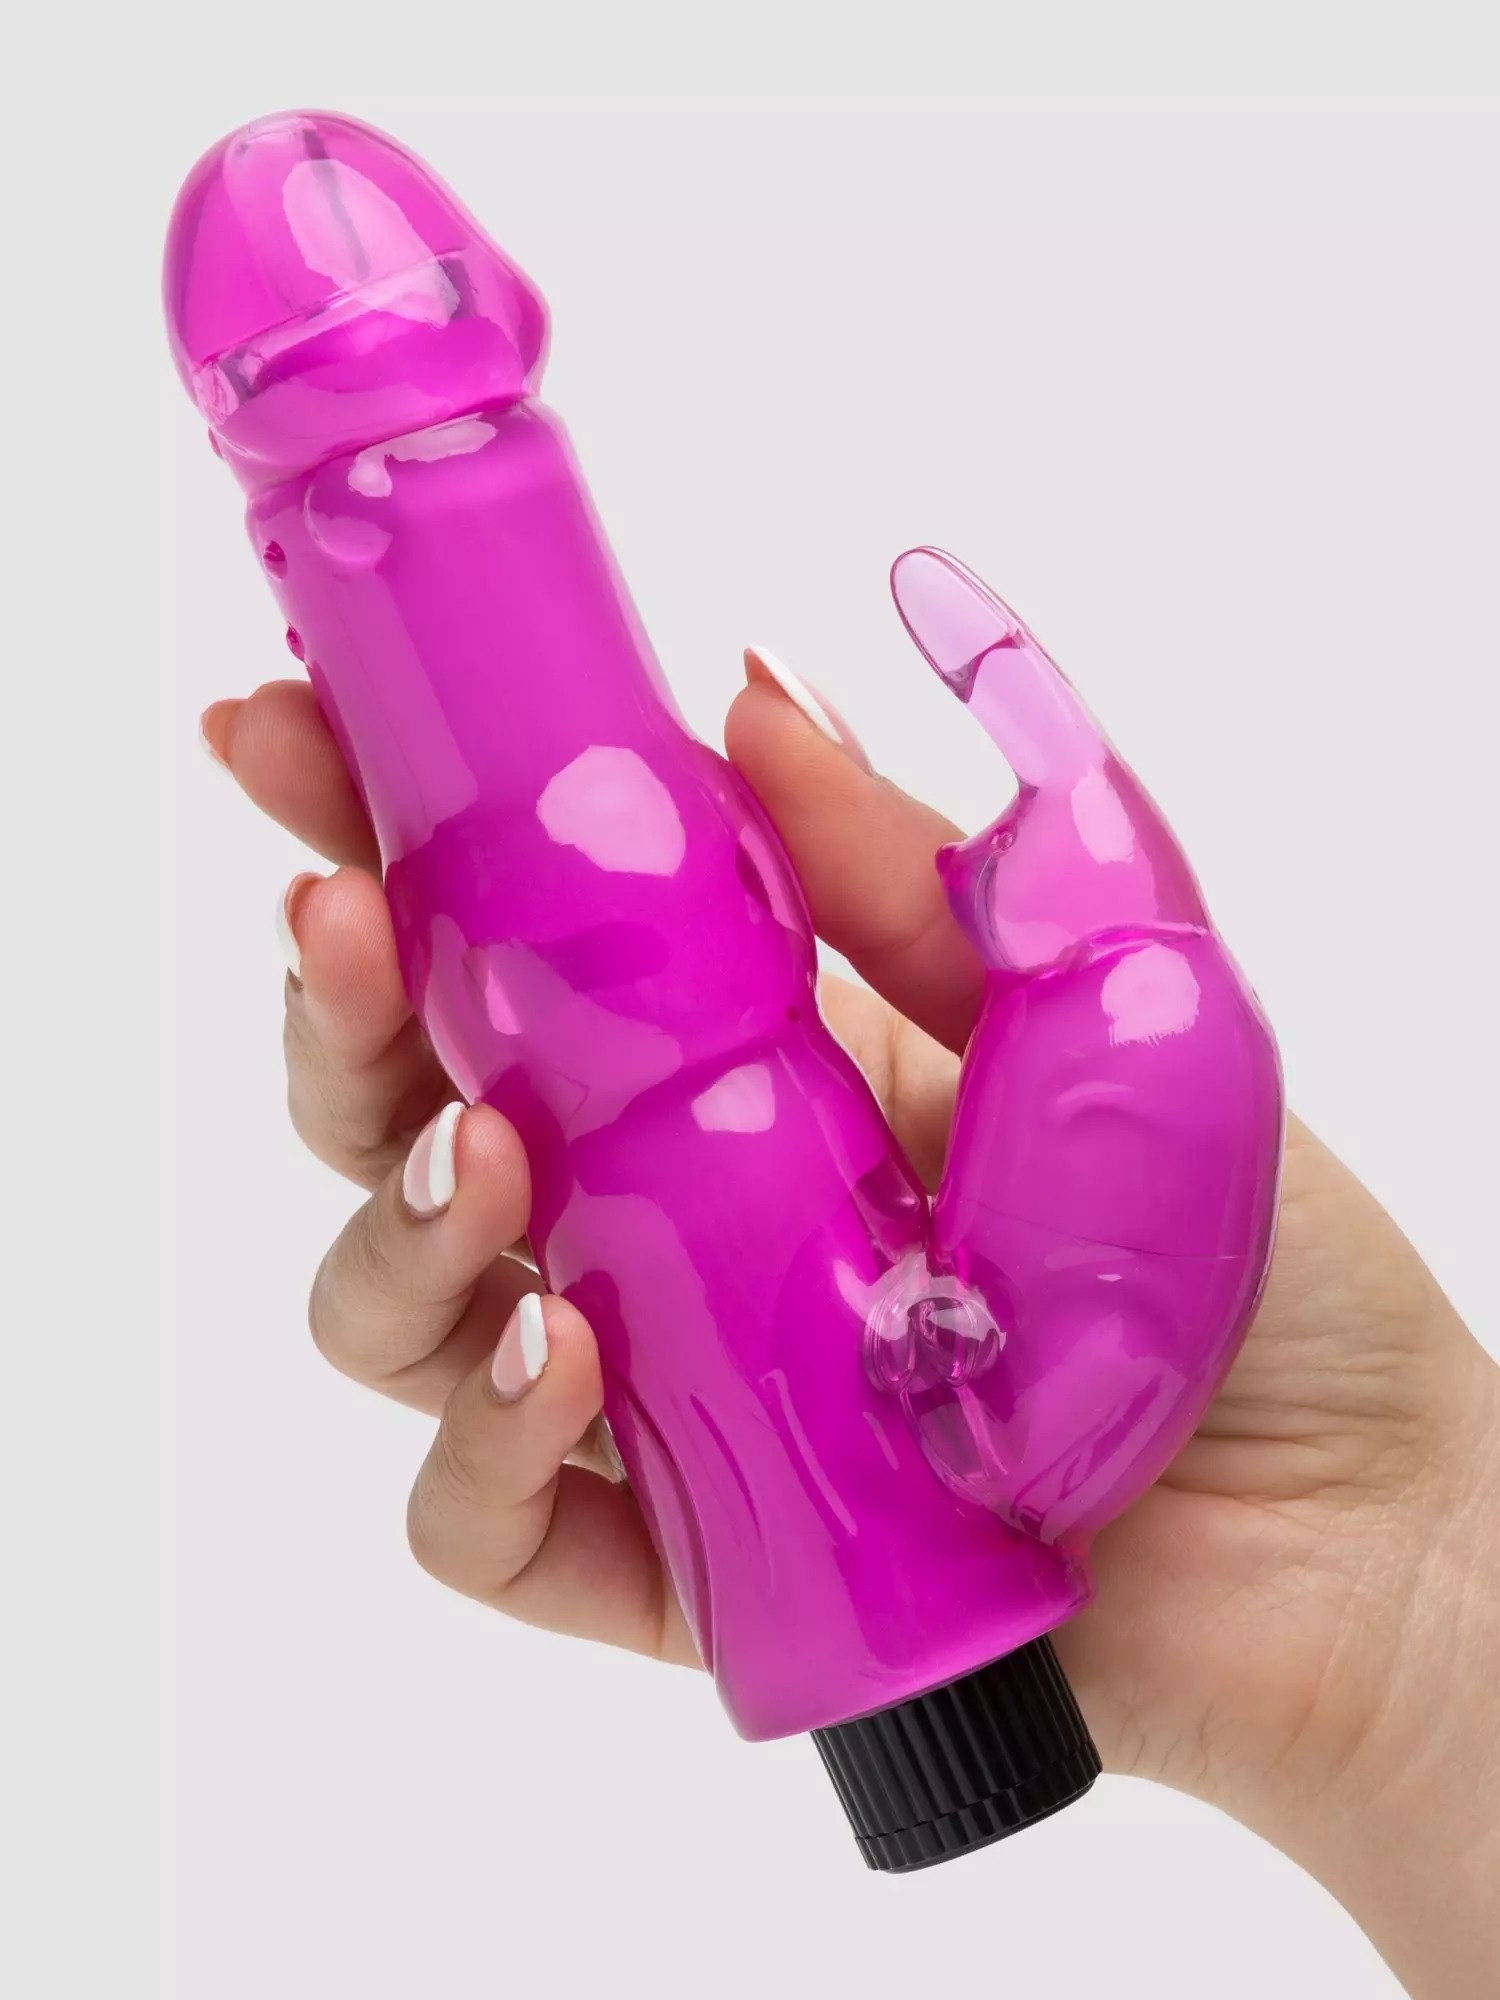 Model holding pink rabbit vibrator